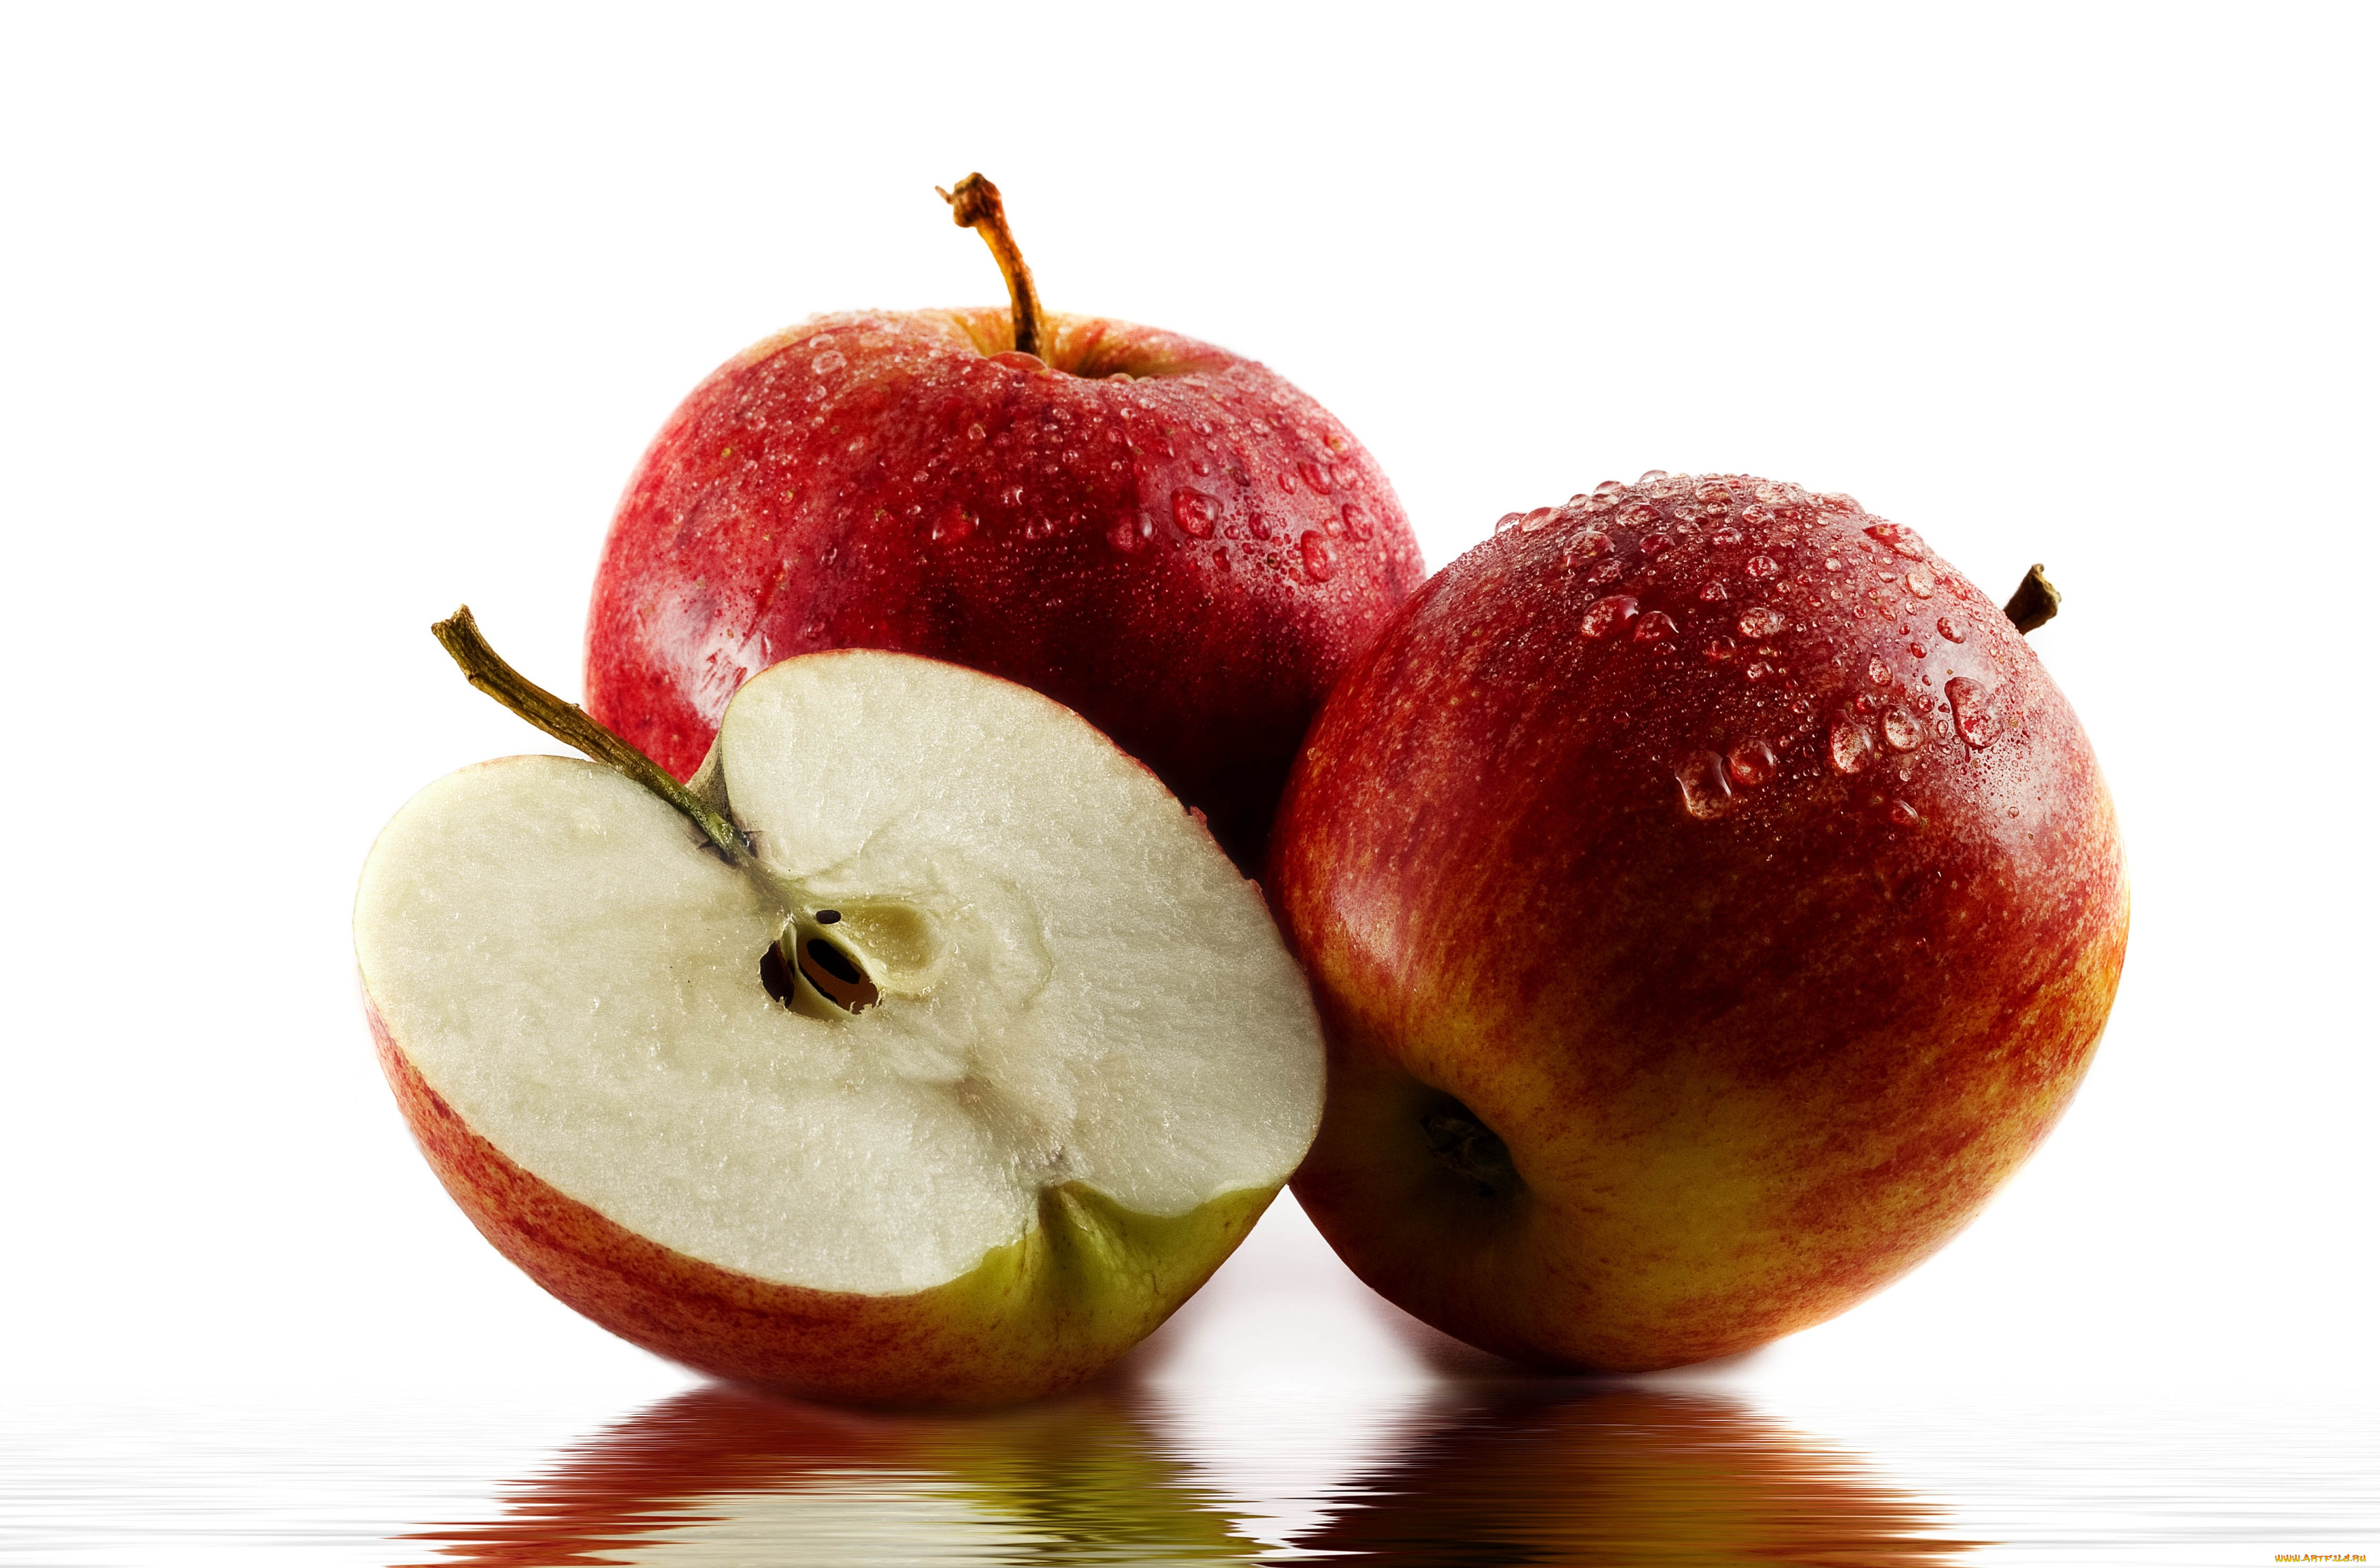 Завтрак 2 яблока. Яблоко. Две половинки яблока. Половина яблока. Разрезанное яблоко.